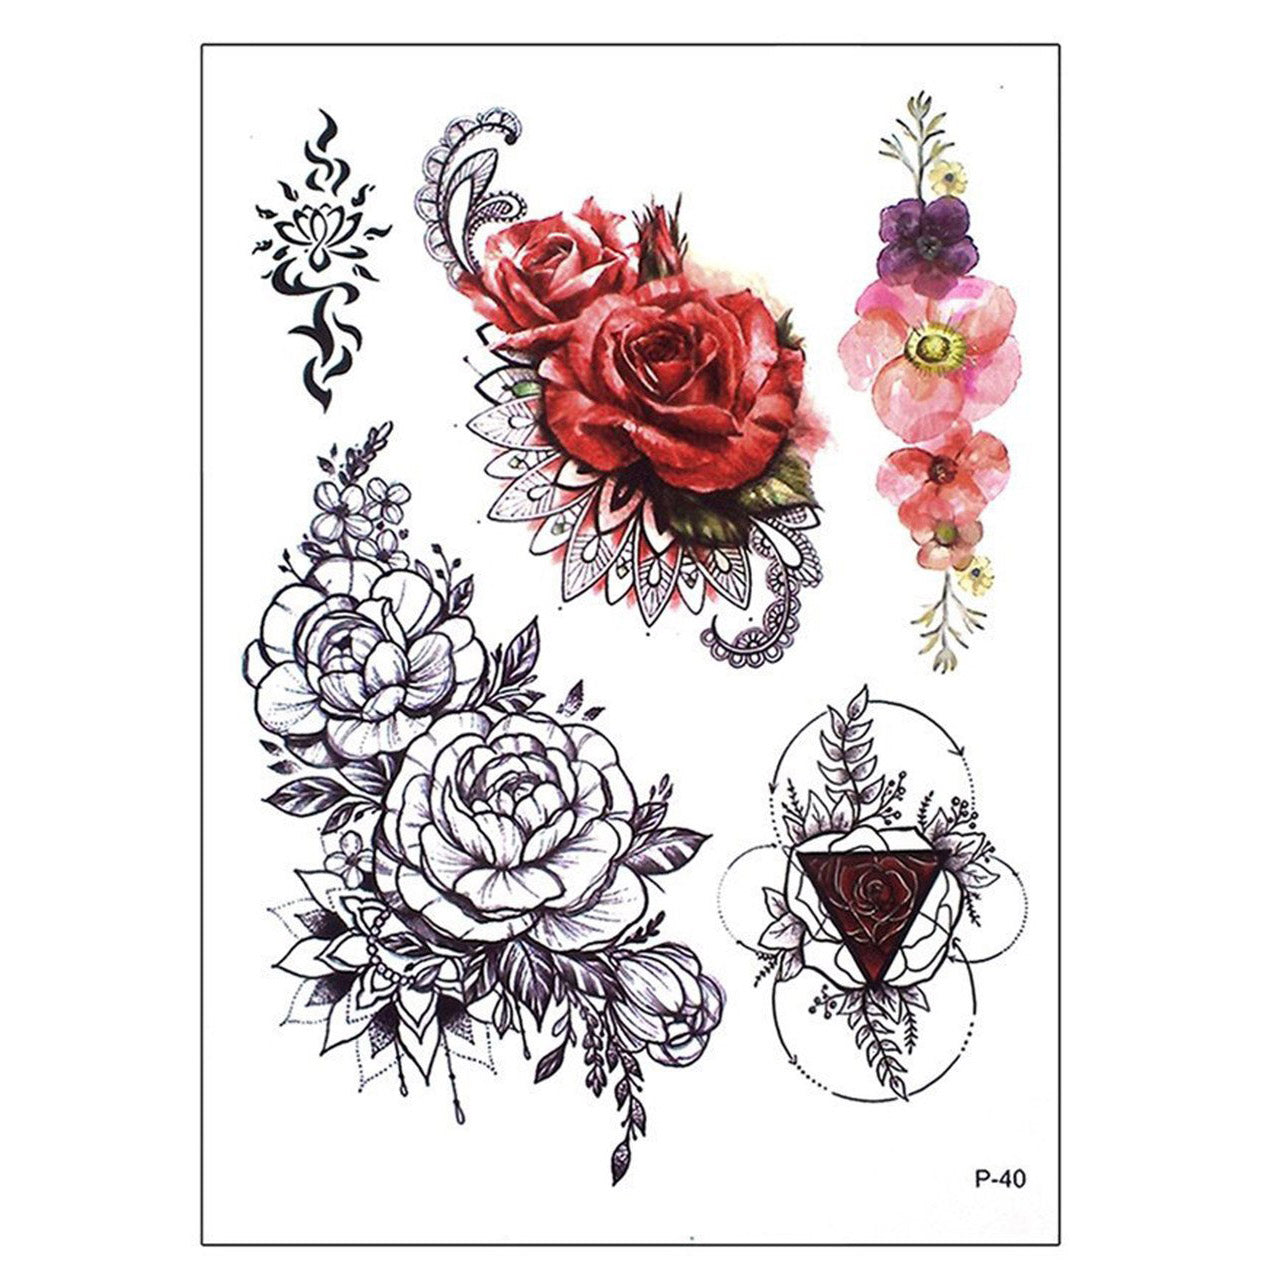 Rose Tattoo mystic symbol Flower with string of beads Flower Mandala  Stock Vector by kalitakatsiarynagmailcom 290569598